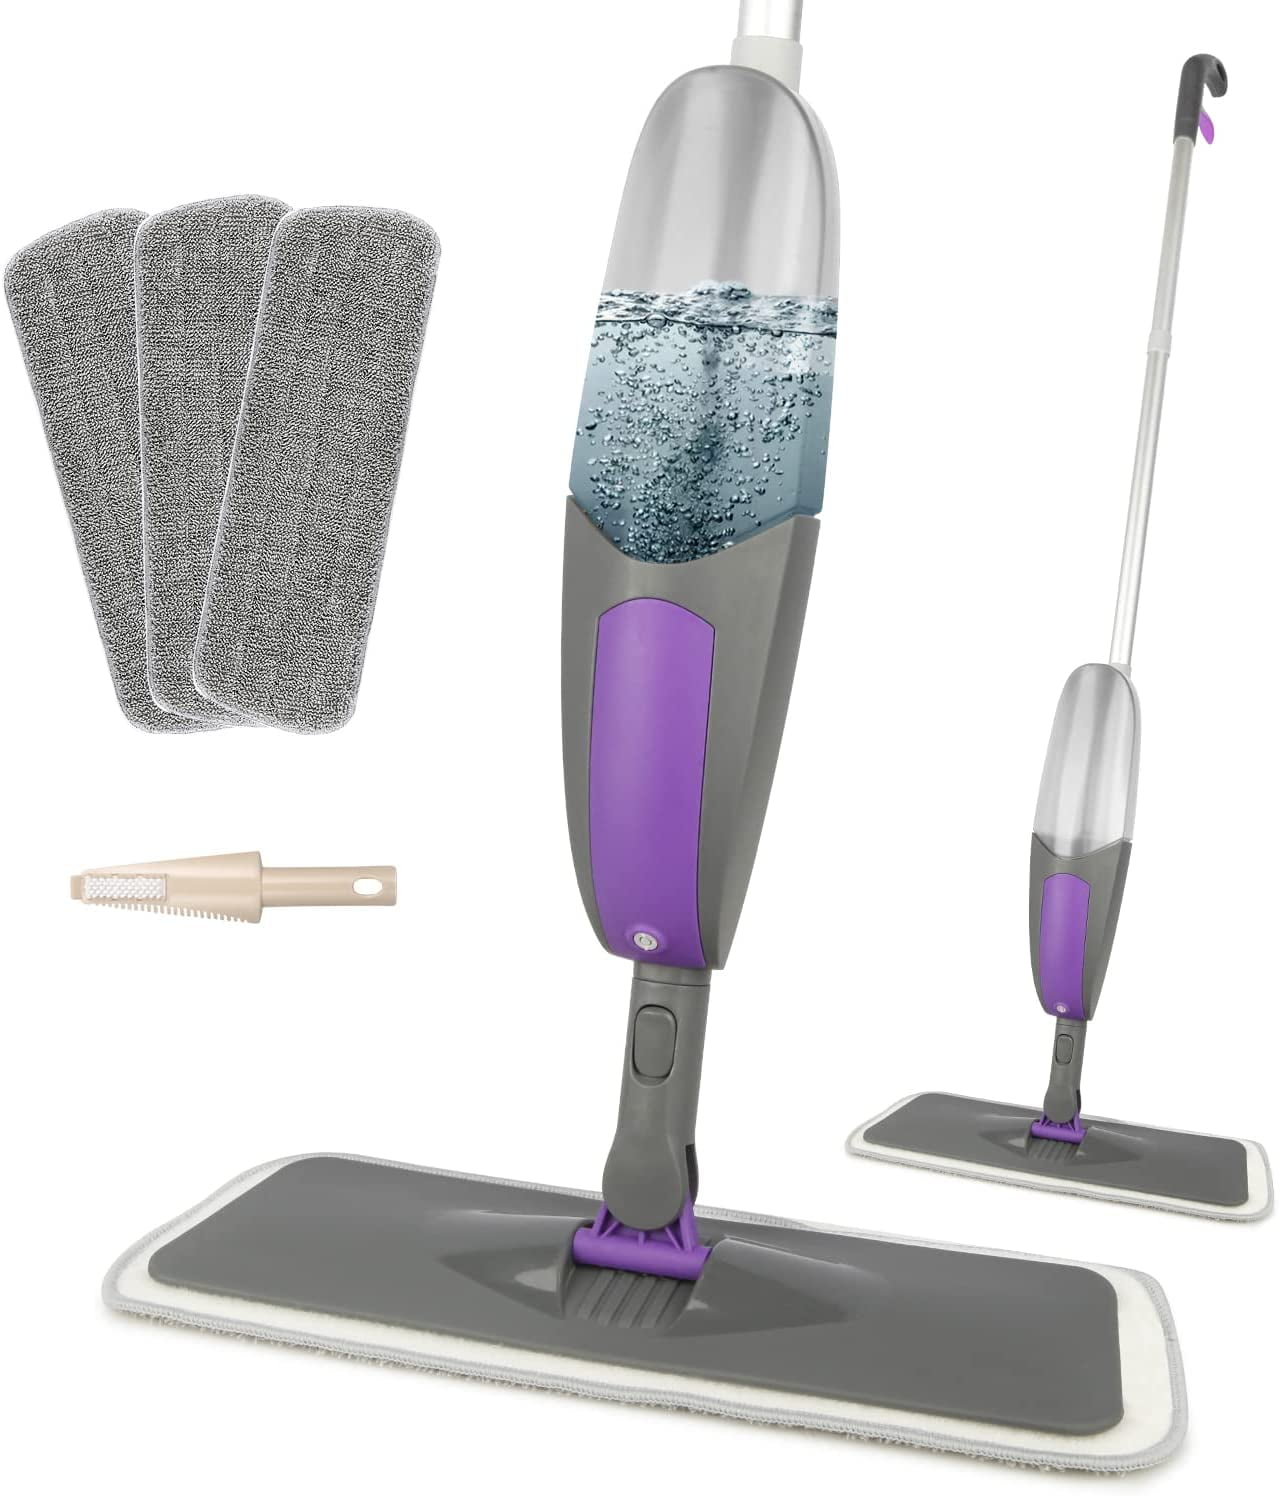 Microfiber Dust Mops for Floor Cleaning - FORSPEEDER Microfiber